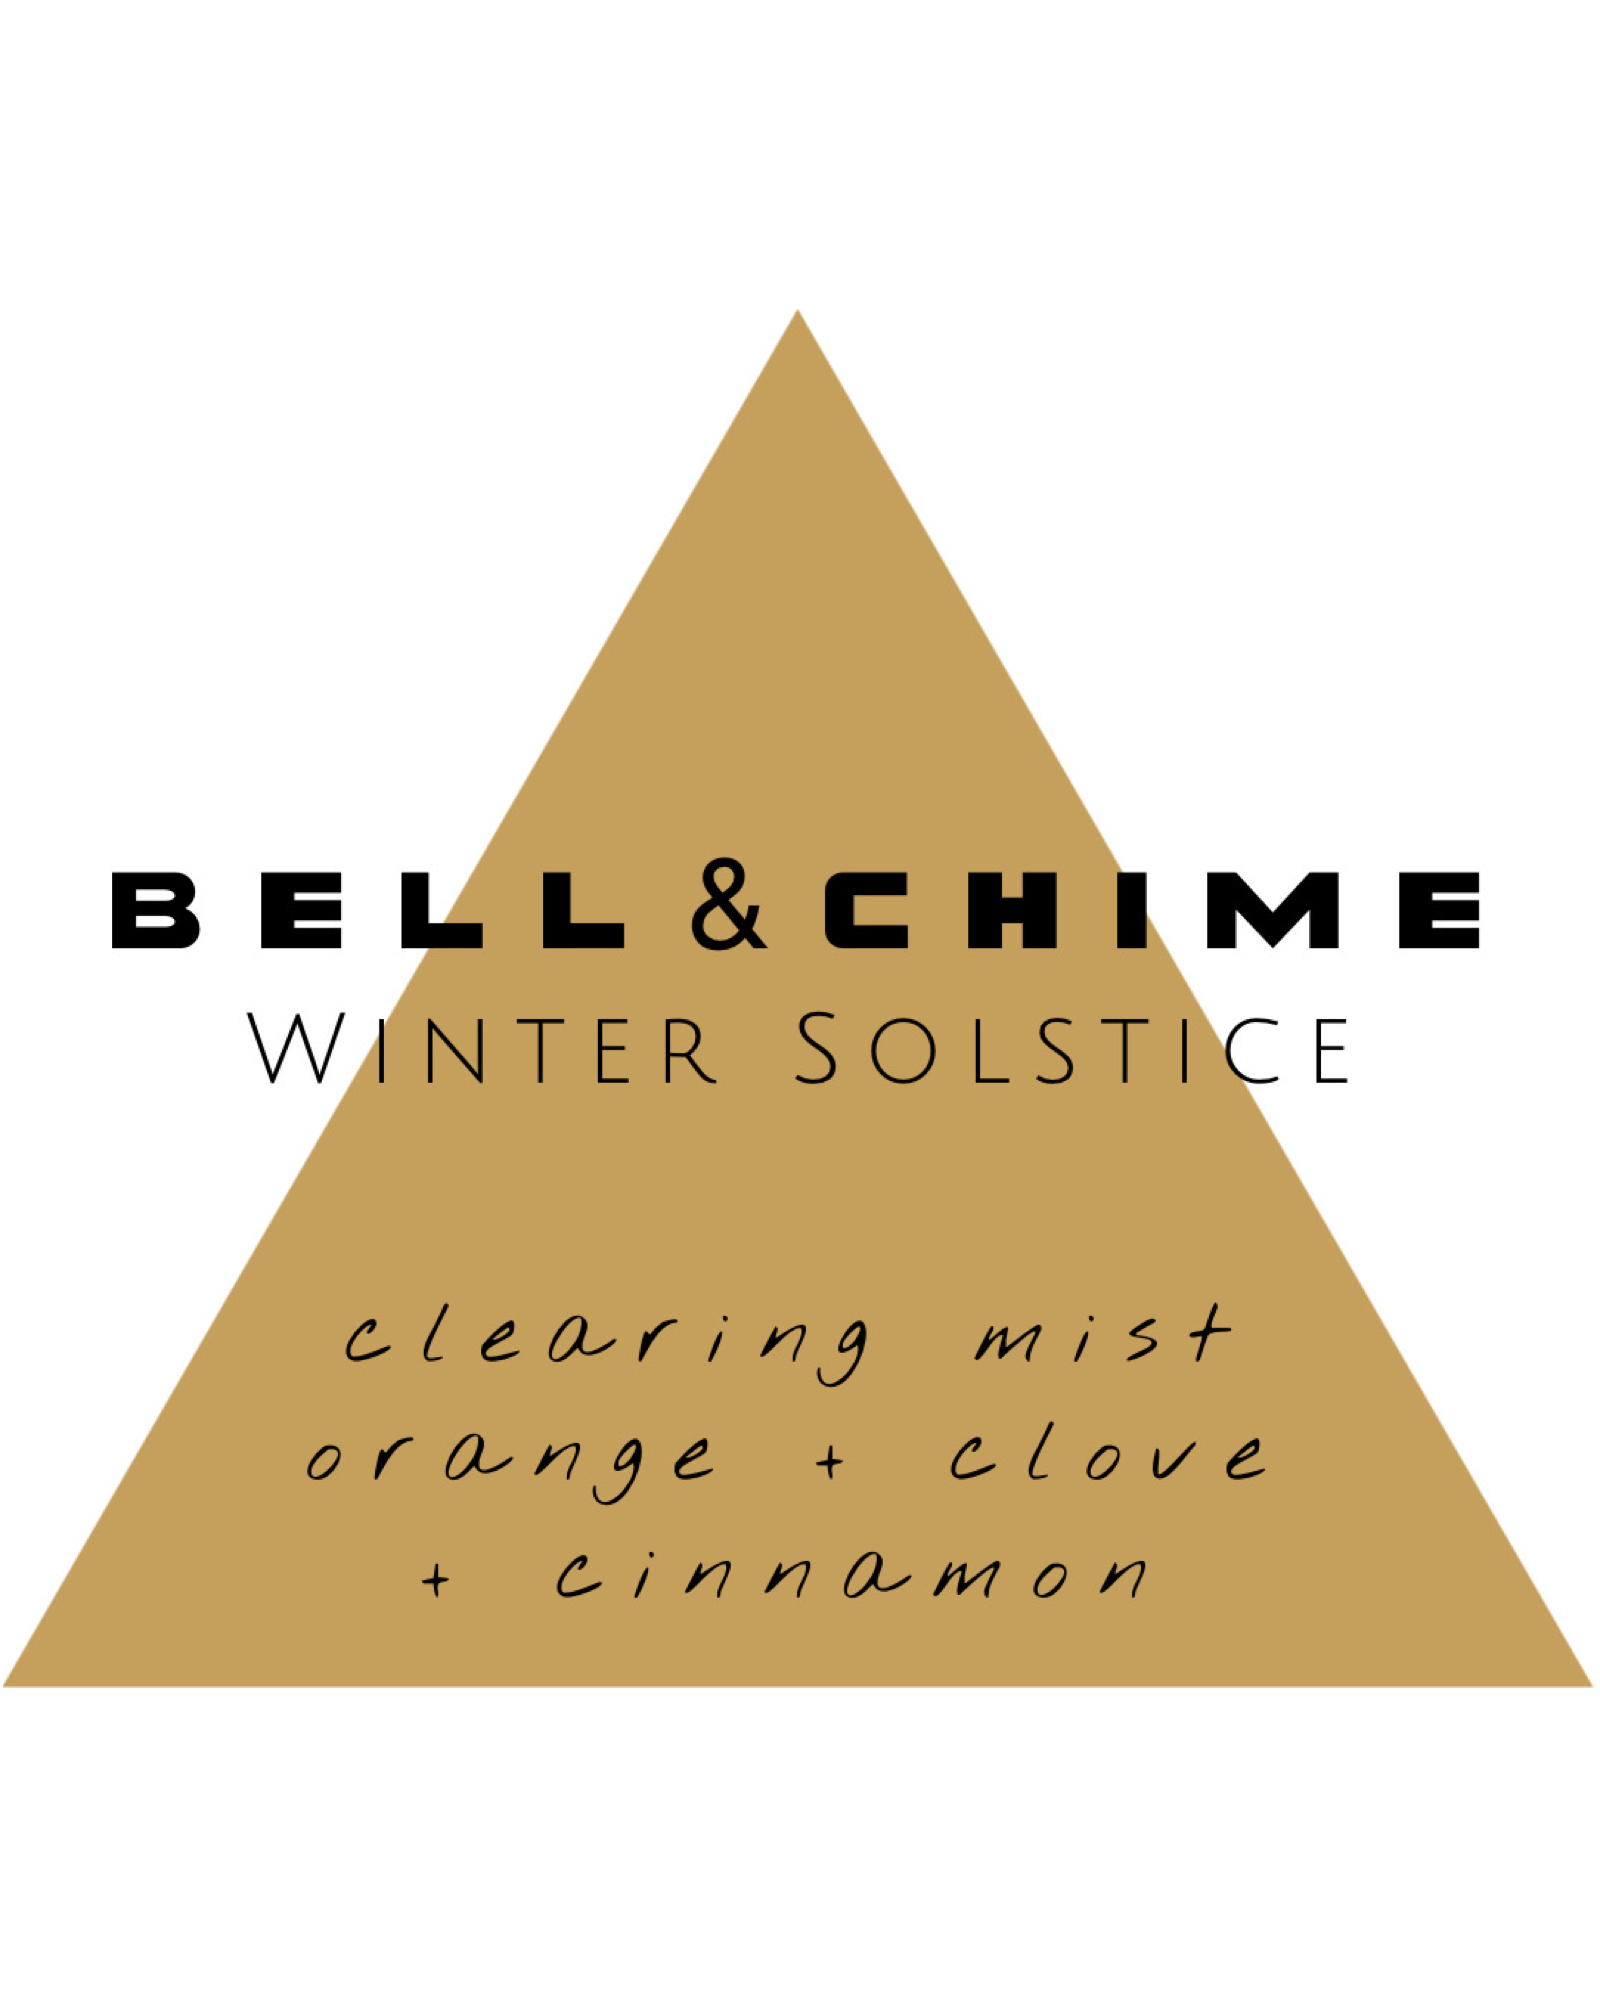 Bell & Chime "Winter Solstice" Clearing Mist Orange + Clove + Cinnamon